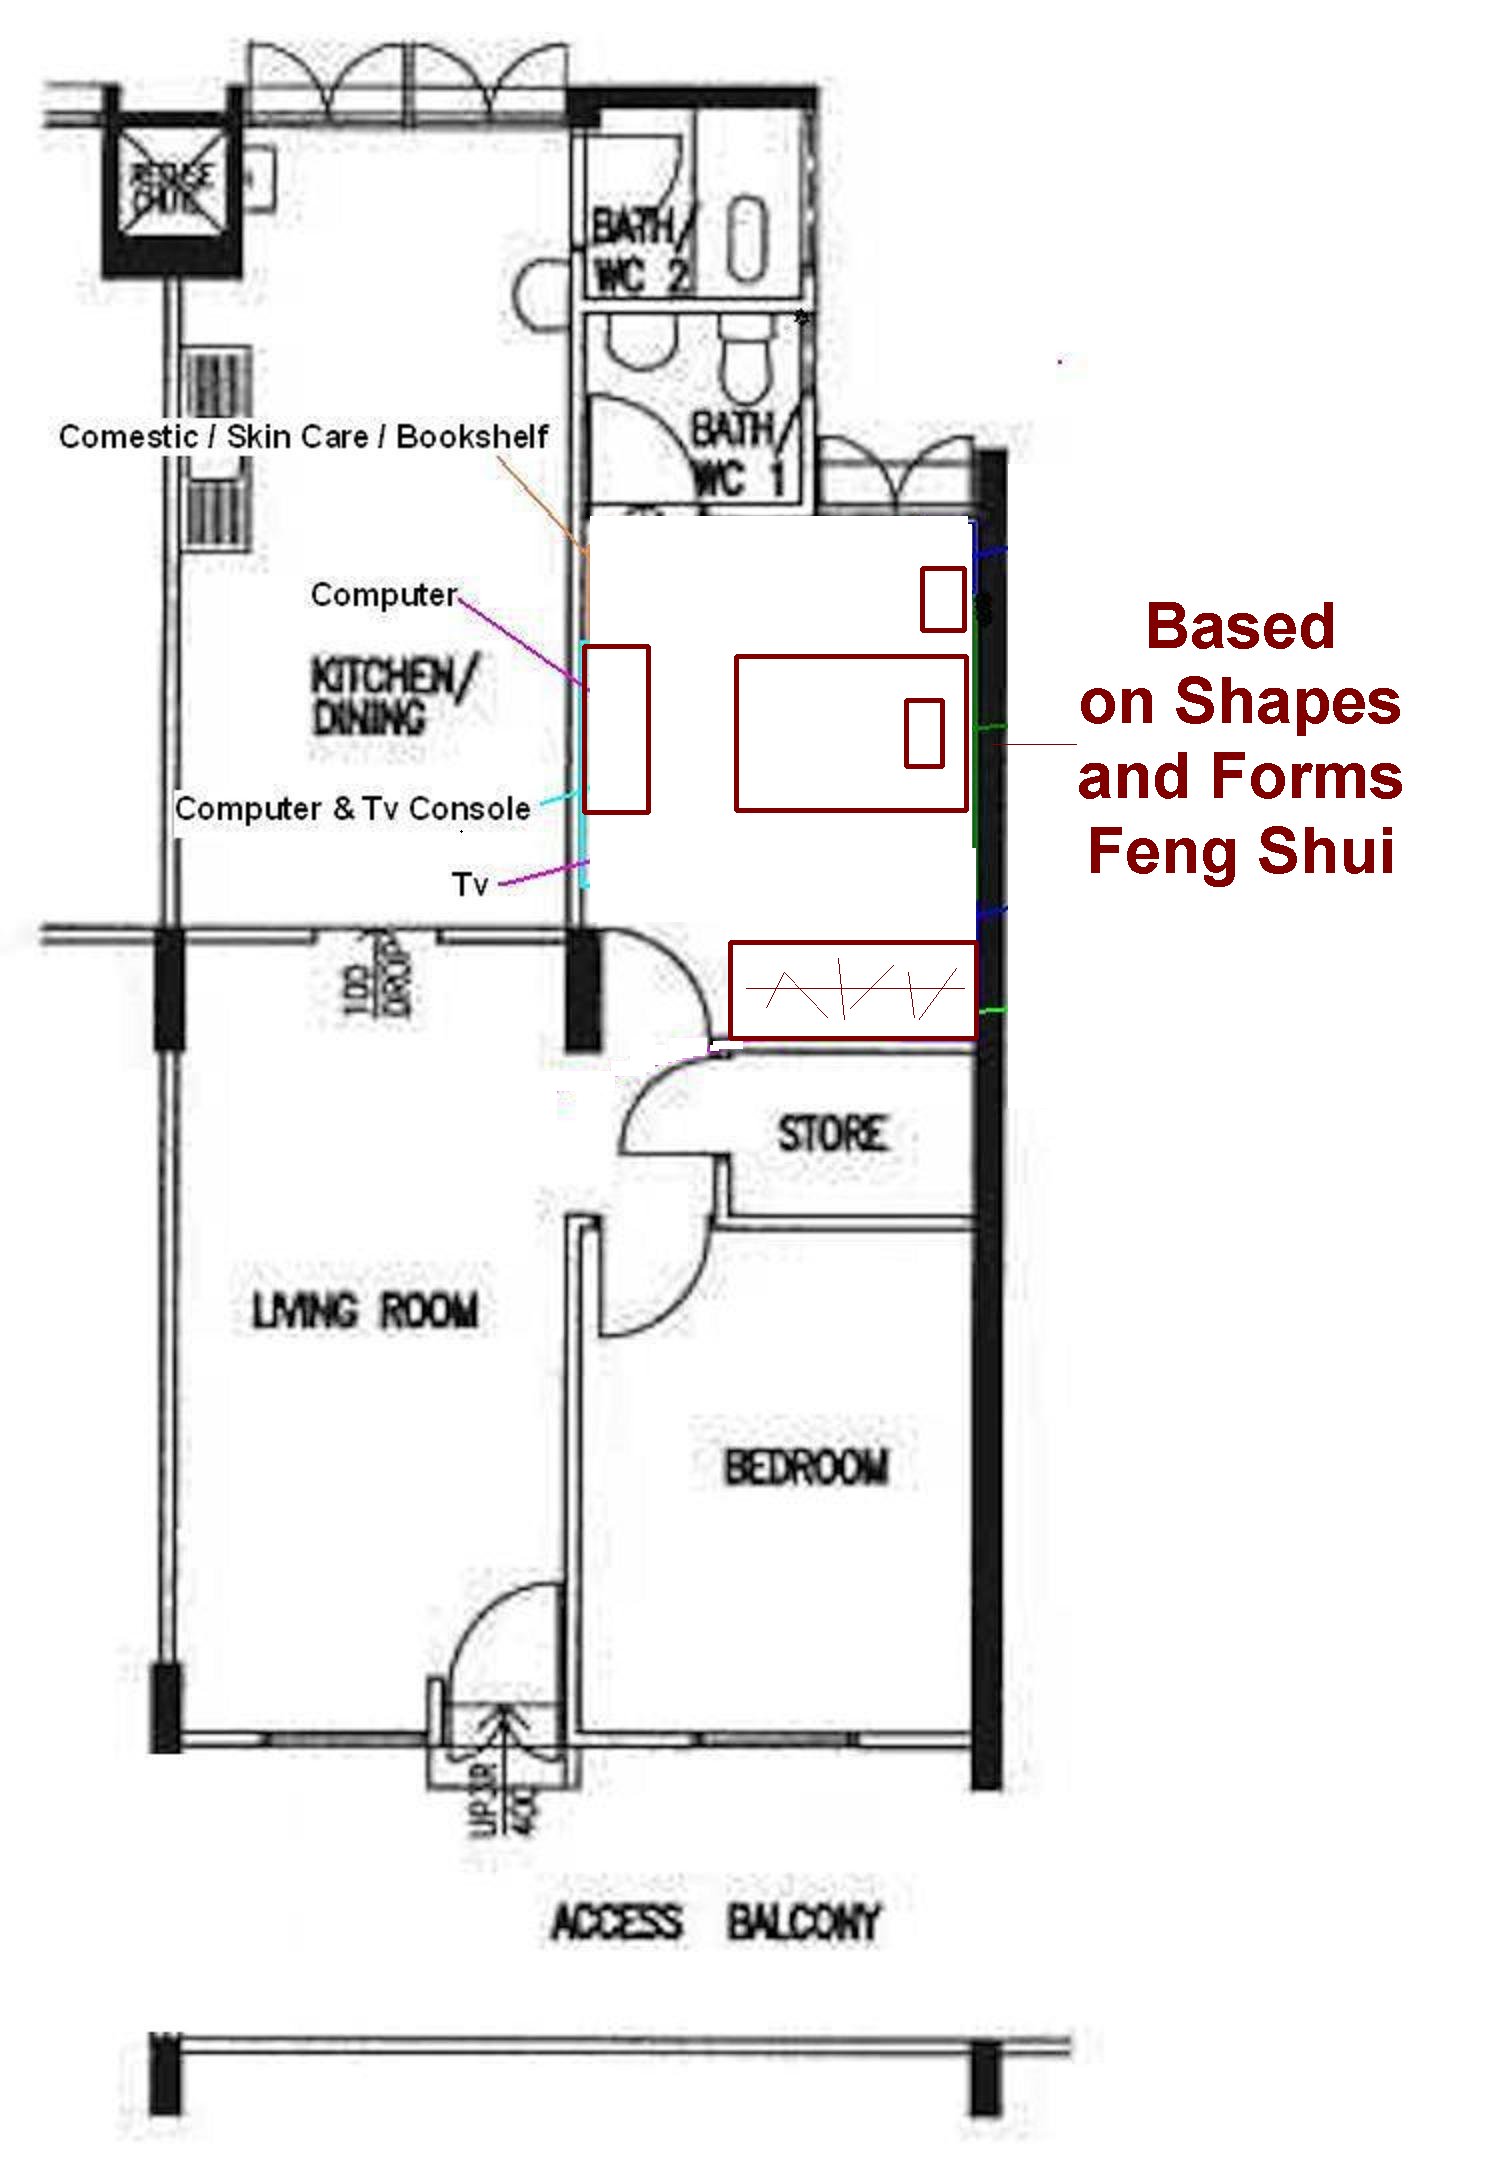 Bedroom Feng Shui General Help Fengshui Geomancy Net